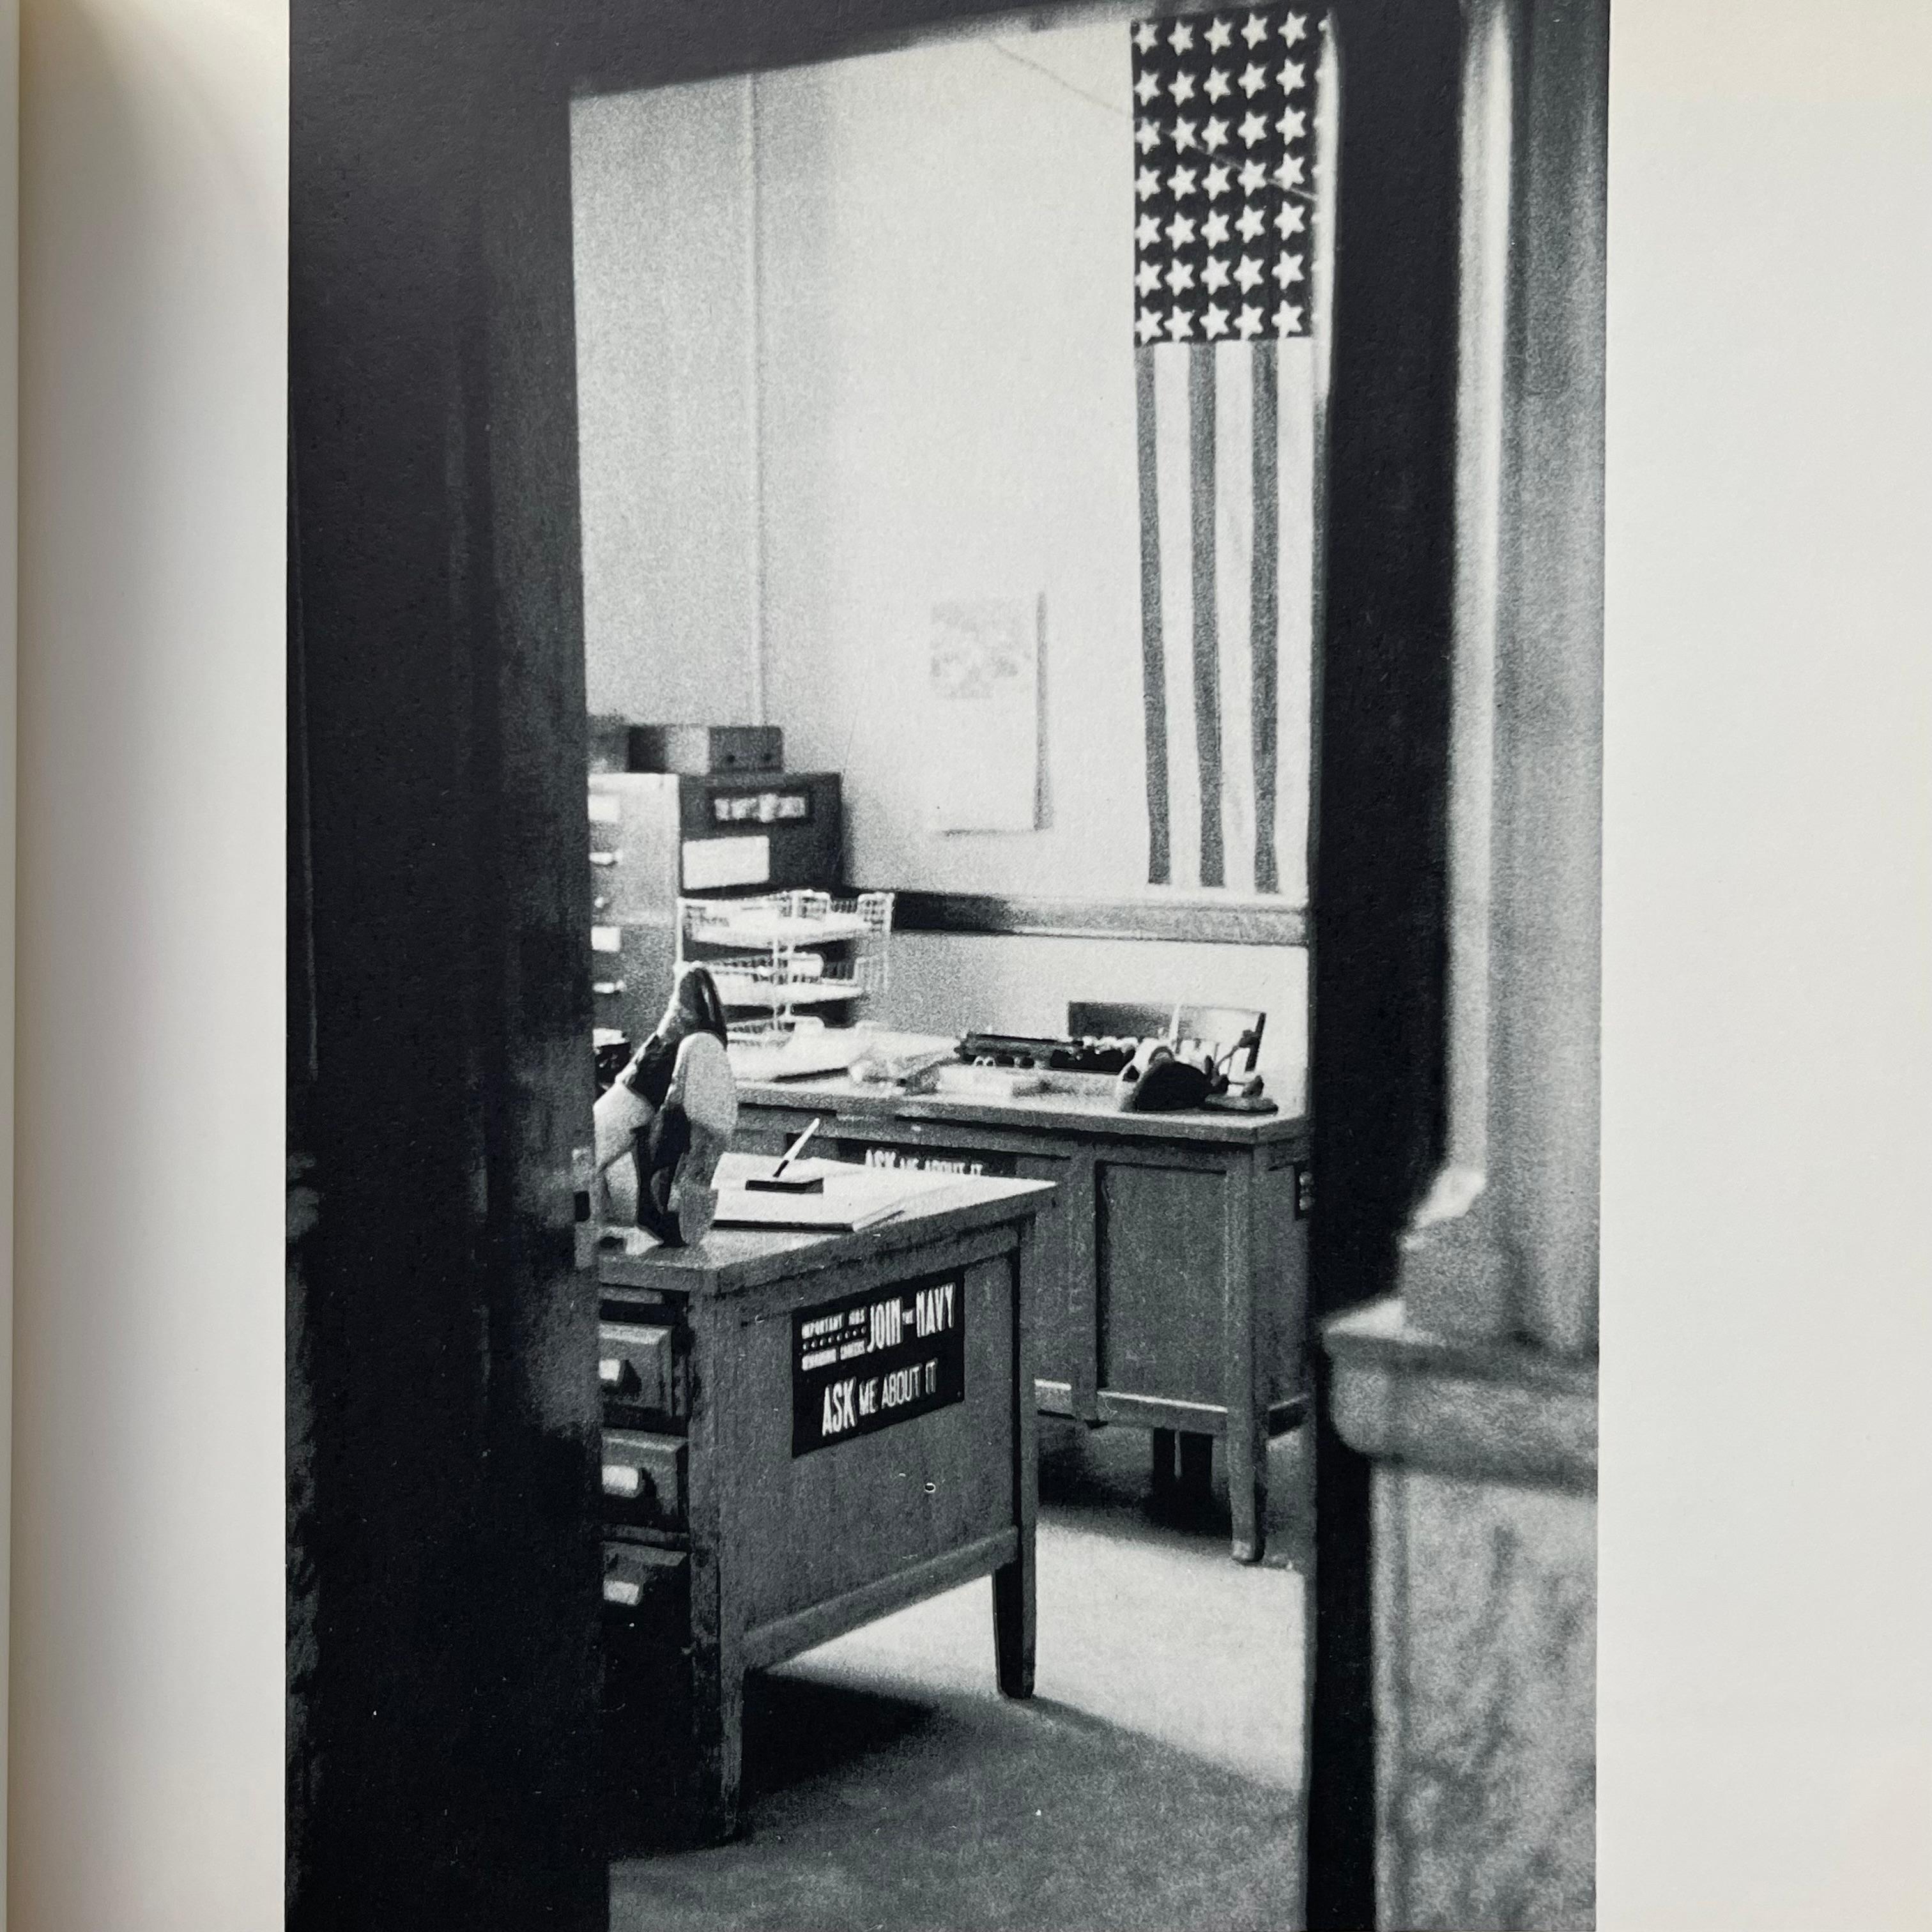 The Americans Robert Frank, Jack Kerouac 1st Enlarged Ed. 1969, The Americans 1